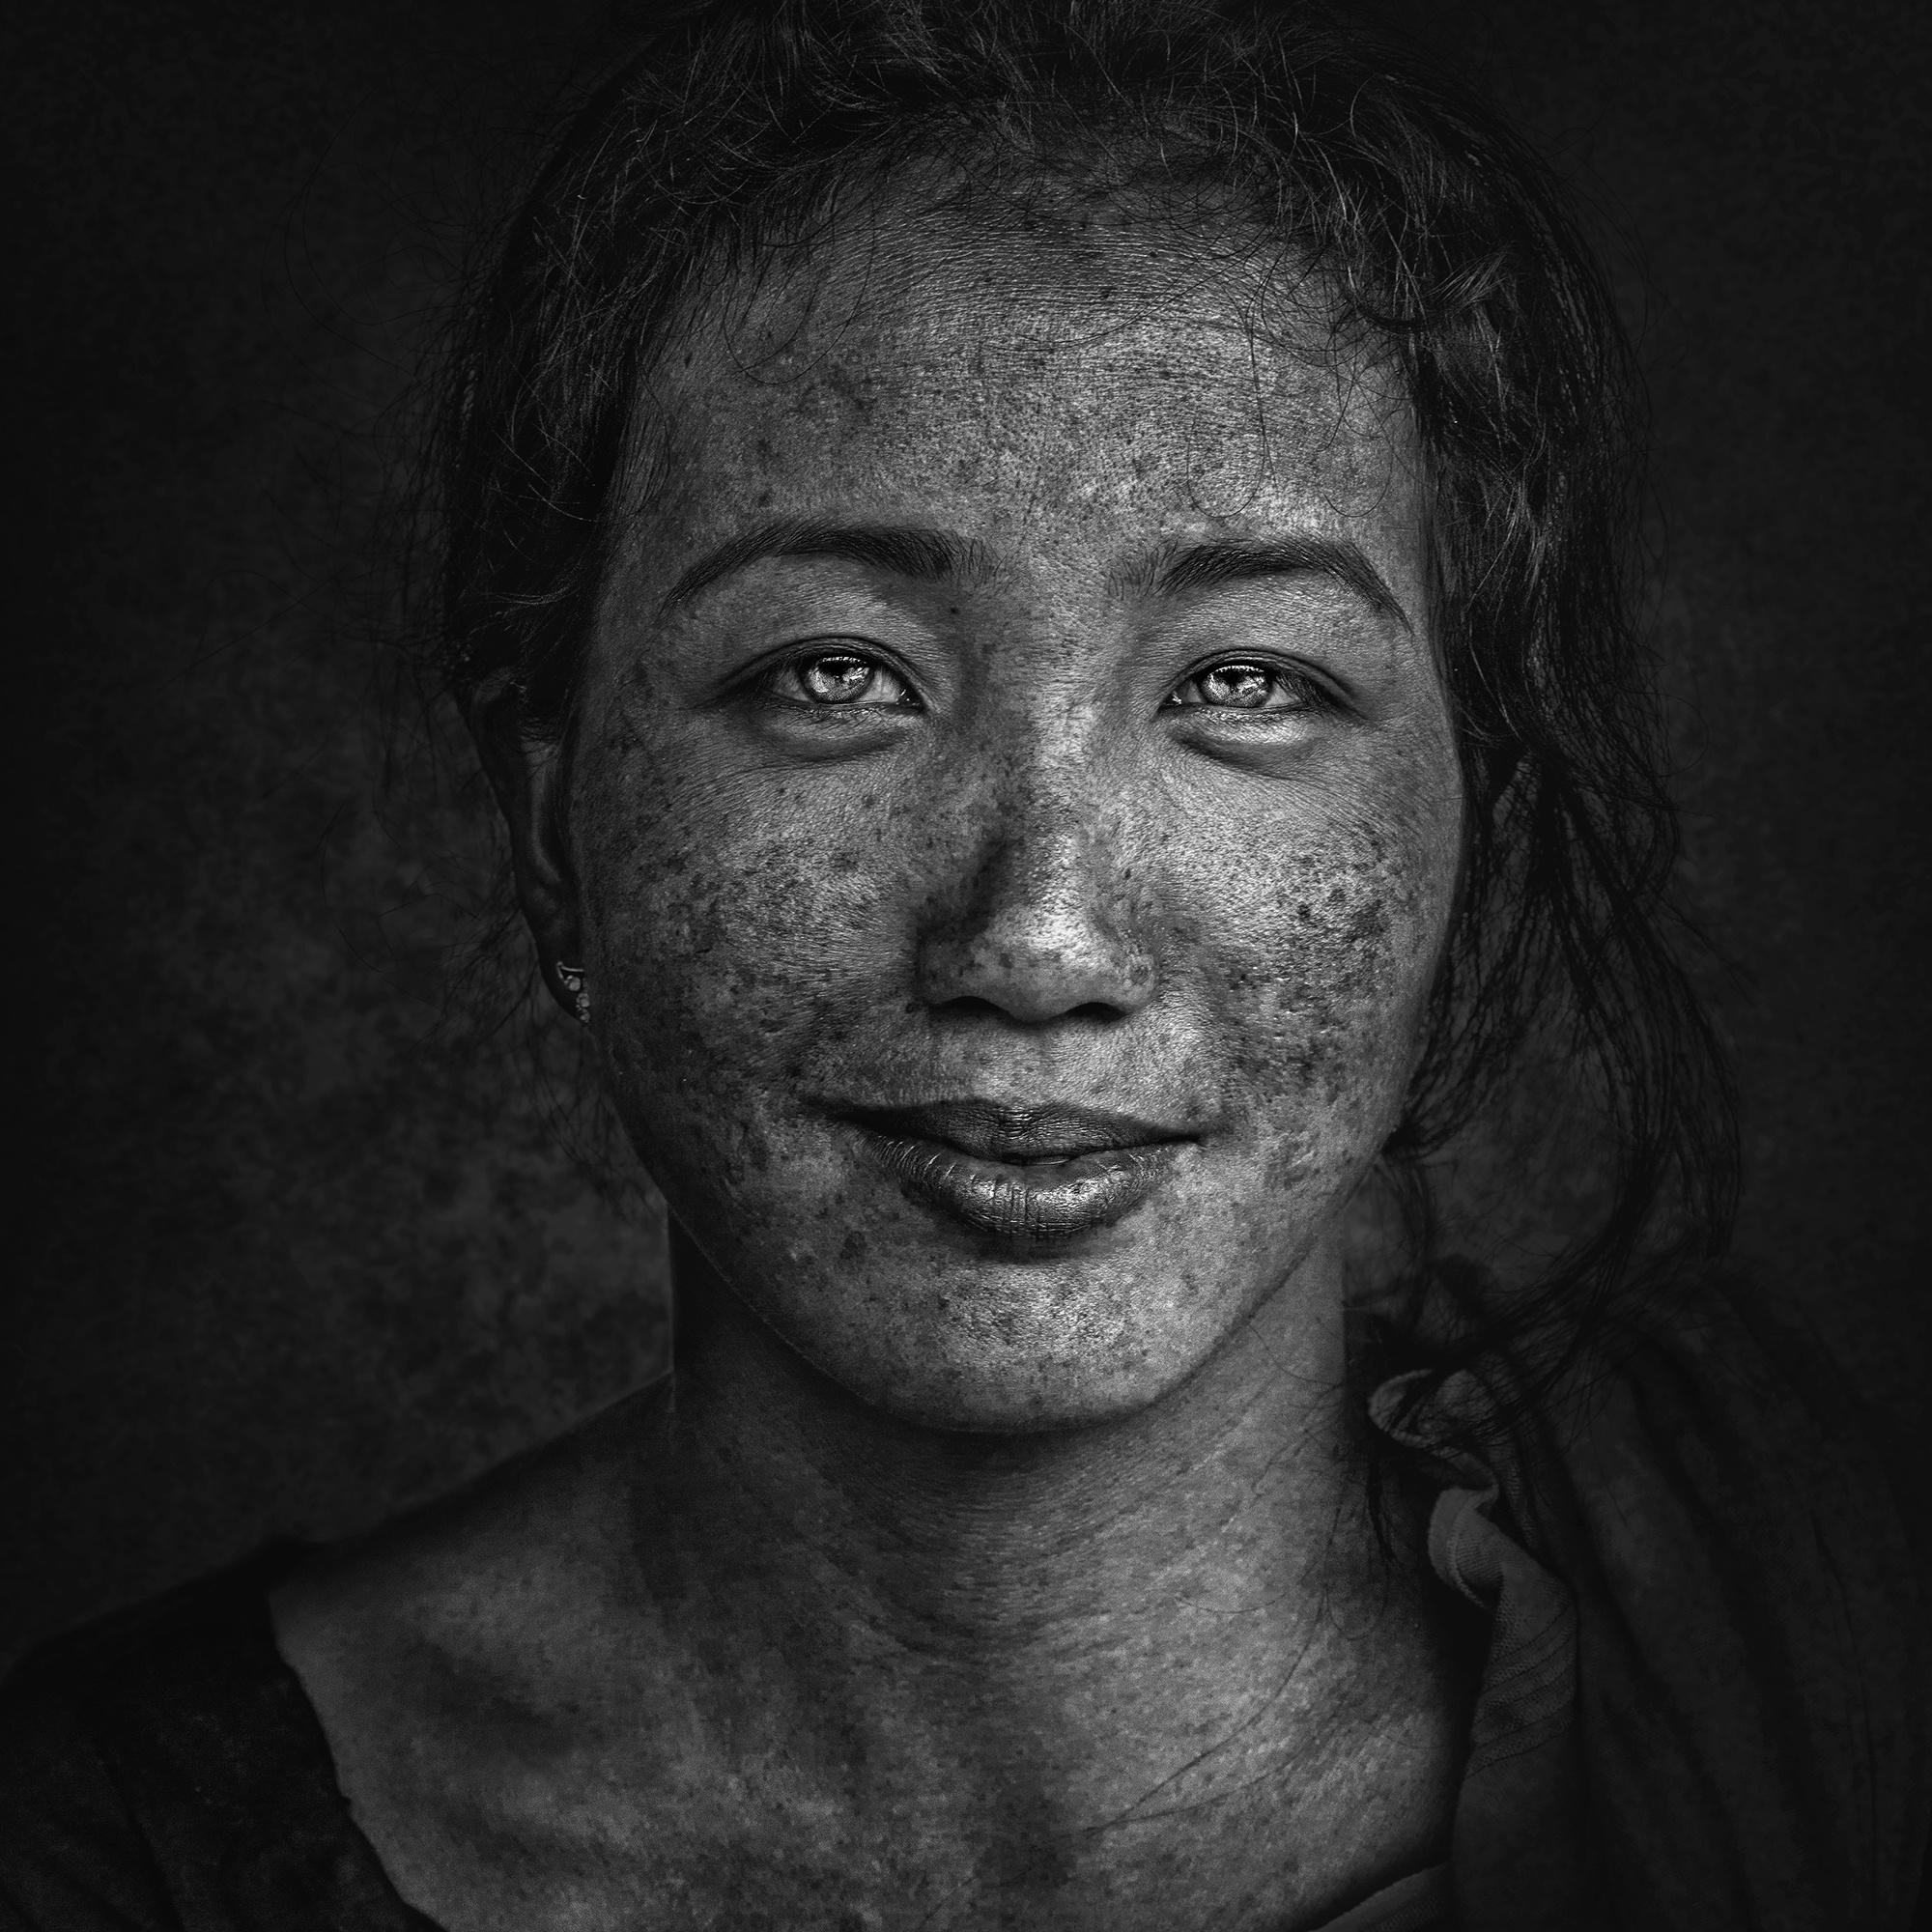 “It’s been a long journey” – Monochrome Portraits by Fadhel Almutaghawi